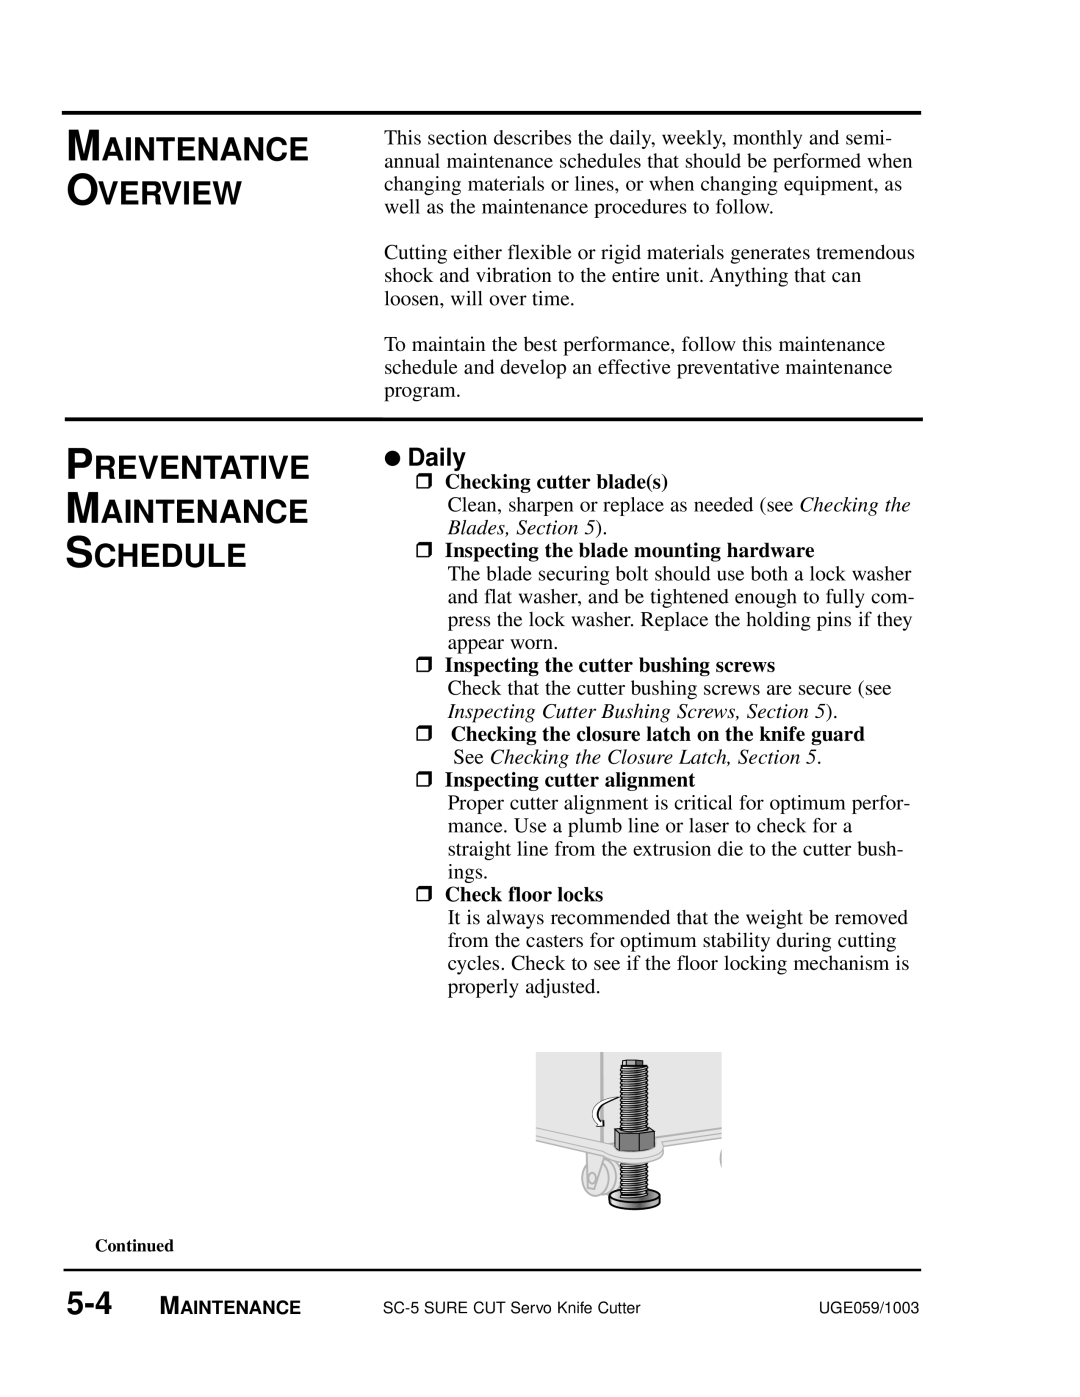 Conair SC-5 Maintenance Overview, Preventative Maintenance Schedule, Daily, Checking cutter blades, Check floor locks 